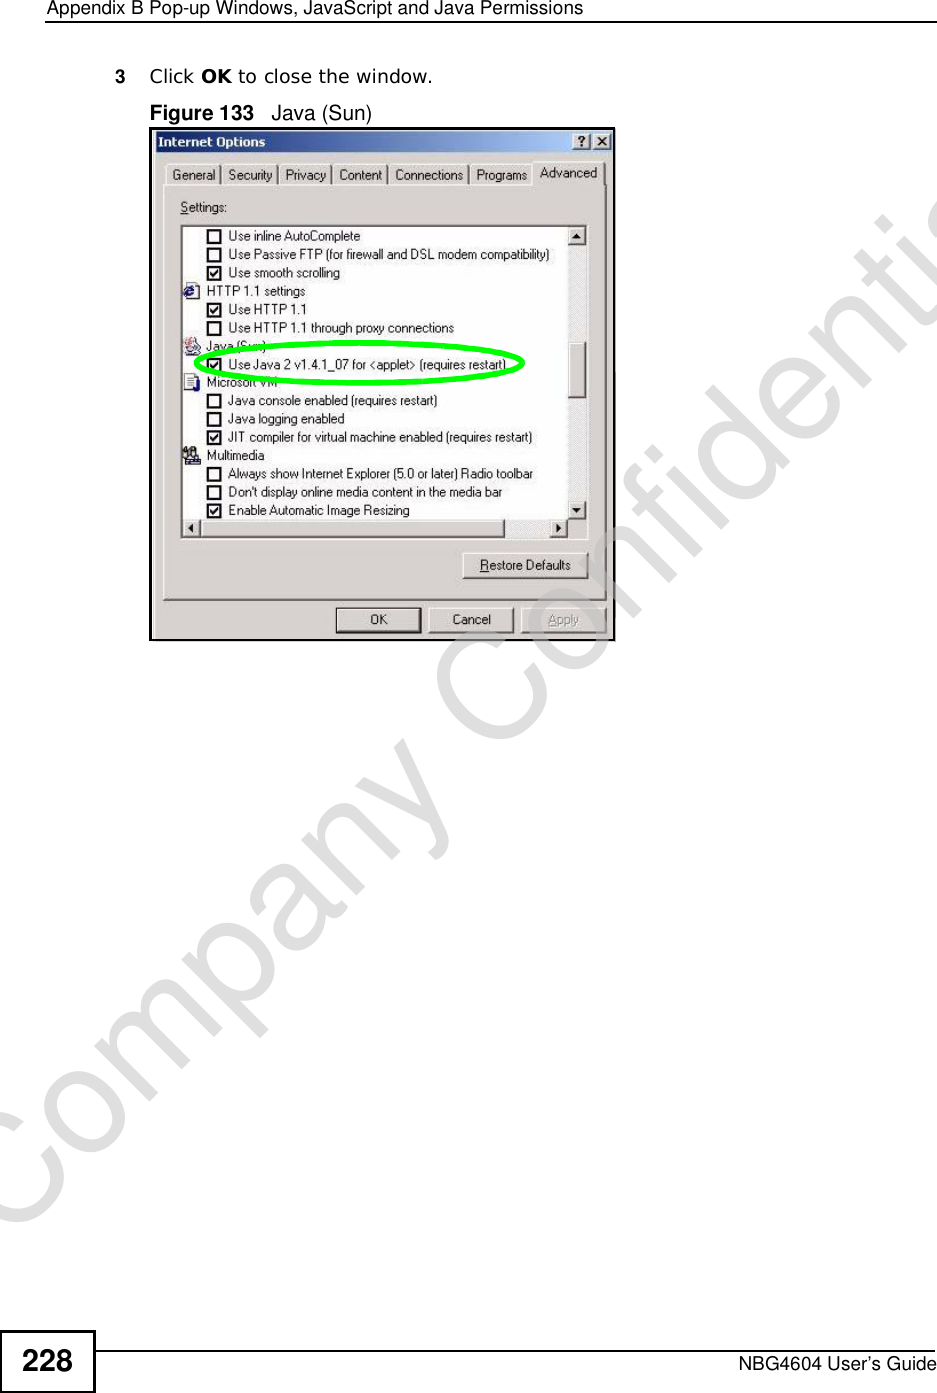 Appendix BPop-up Windows, JavaScript and Java PermissionsNBG4604 User’s Guide2283Click OK to close the window.Figure 133   Java (Sun)Company Confidential